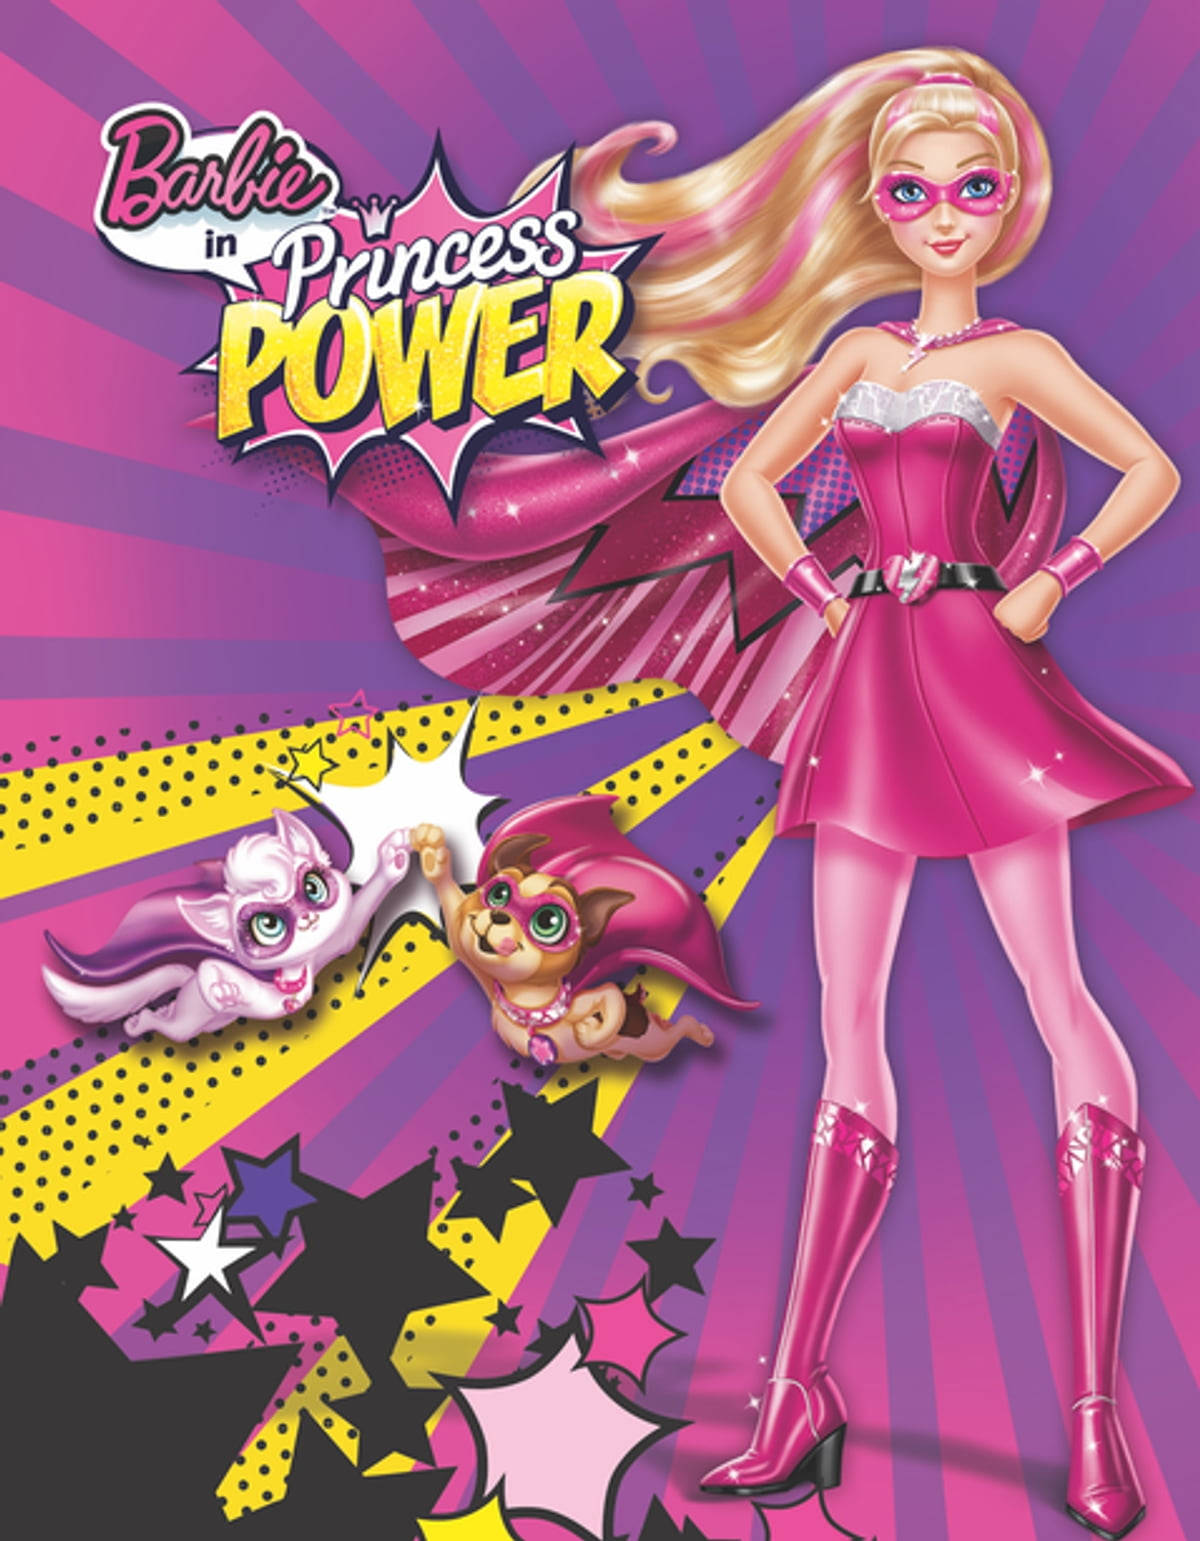 Barbieprinzessin Power Poster Wallpaper